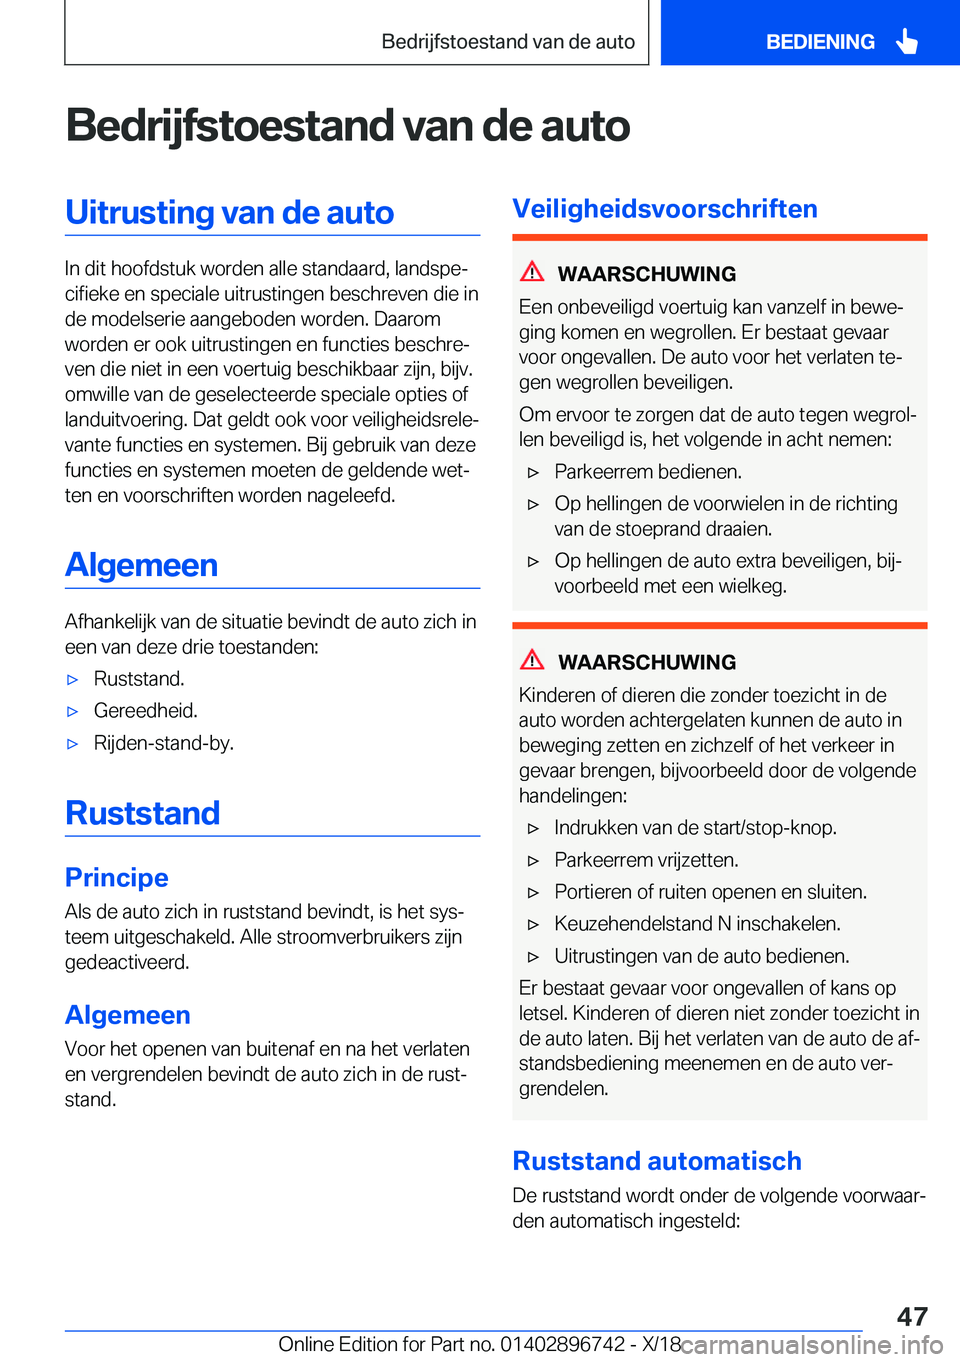 BMW X5 2019  Instructieboekjes (in Dutch) �B�e�d�r�i�j�f�s�t�o�e�s�t�a�n�d��v�a�n��d�e��a�u�t�o�U�i�t�r�u�s�t�i�n�g��v�a�n��d�e��a�u�t�o
�I�n��d�i�t��h�o�o�f�d�s�t�u�k��w�o�r�d�e�n��a�l�l�e��s�t�a�n�d�a�a�r�d�,��l�a�n�d�s�p�ej�c�